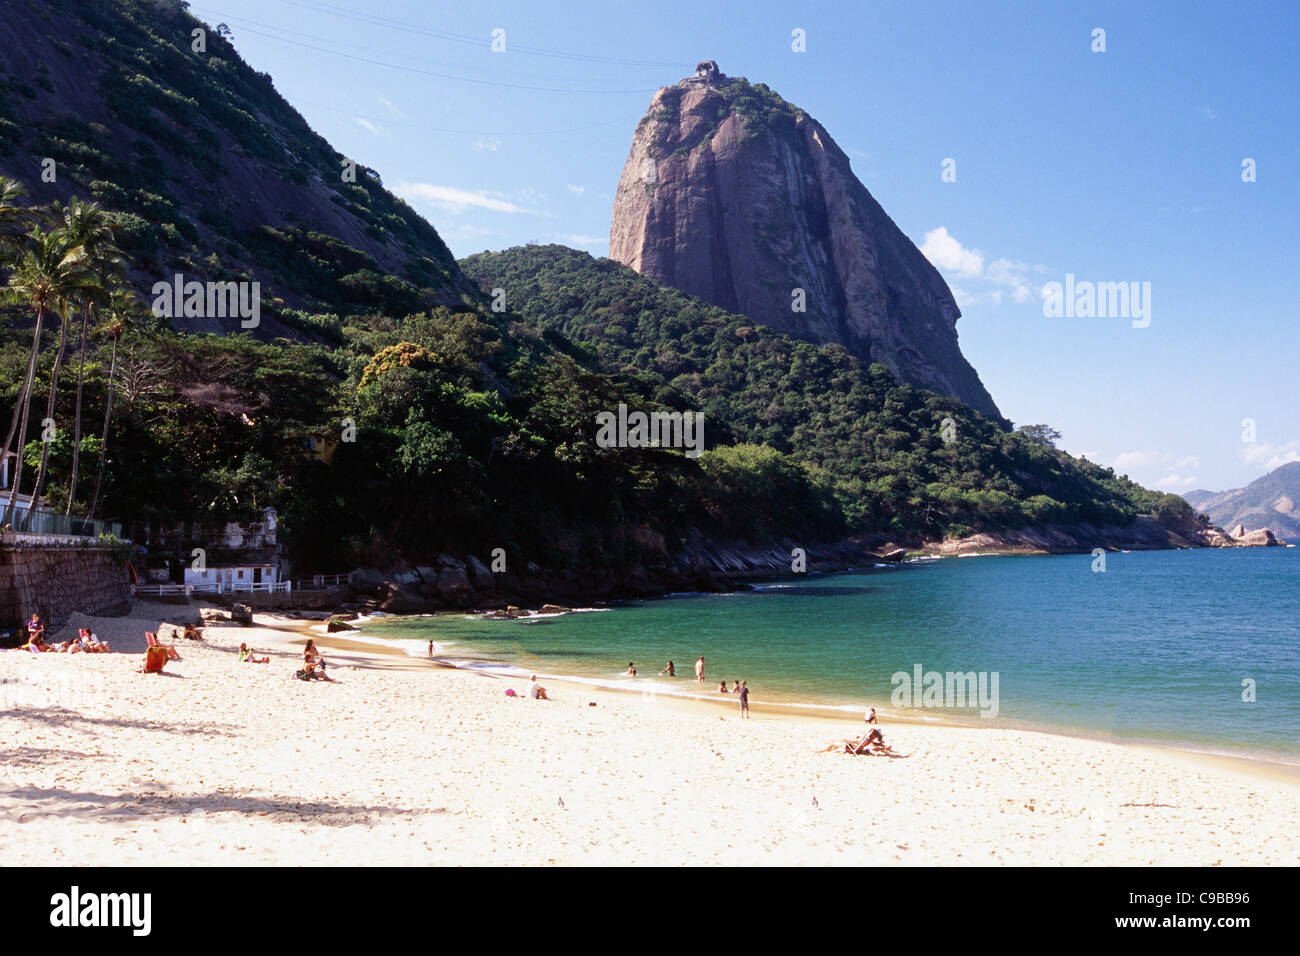 Beach with a View of Sugarloaf Mountain, Vermelha Beach, Rio de Janeiro, Brazil Stock Photo